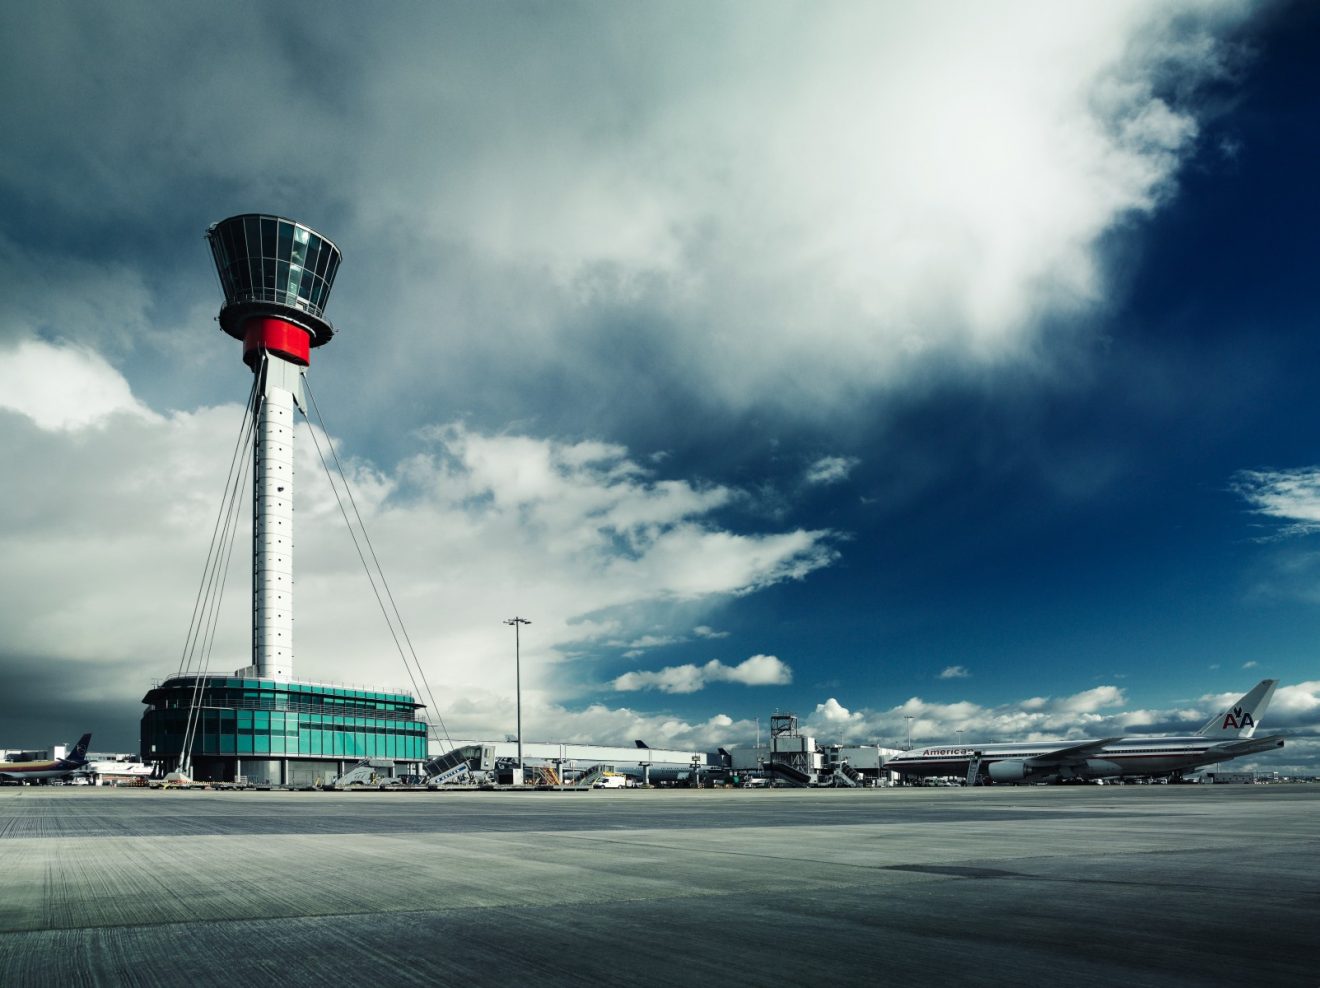 London Heathrow's control tower